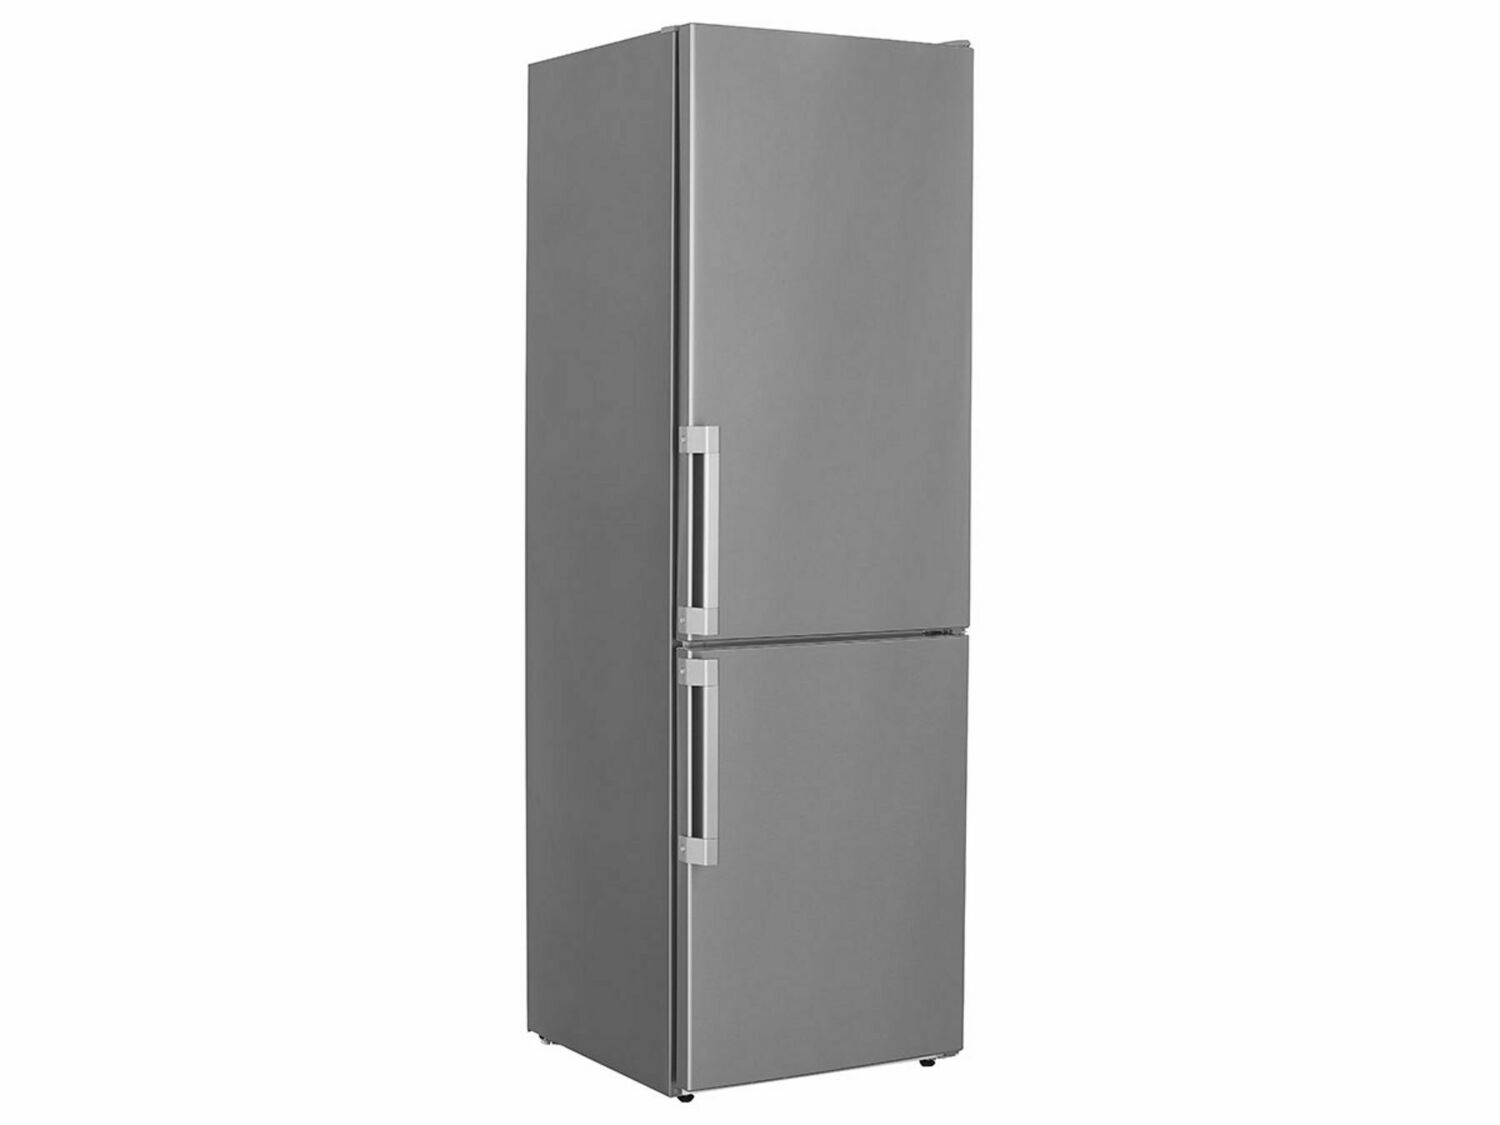 Bottom-Mount Refrigerator 24-inches wide - Fingerprint Resistant Stainless Steel